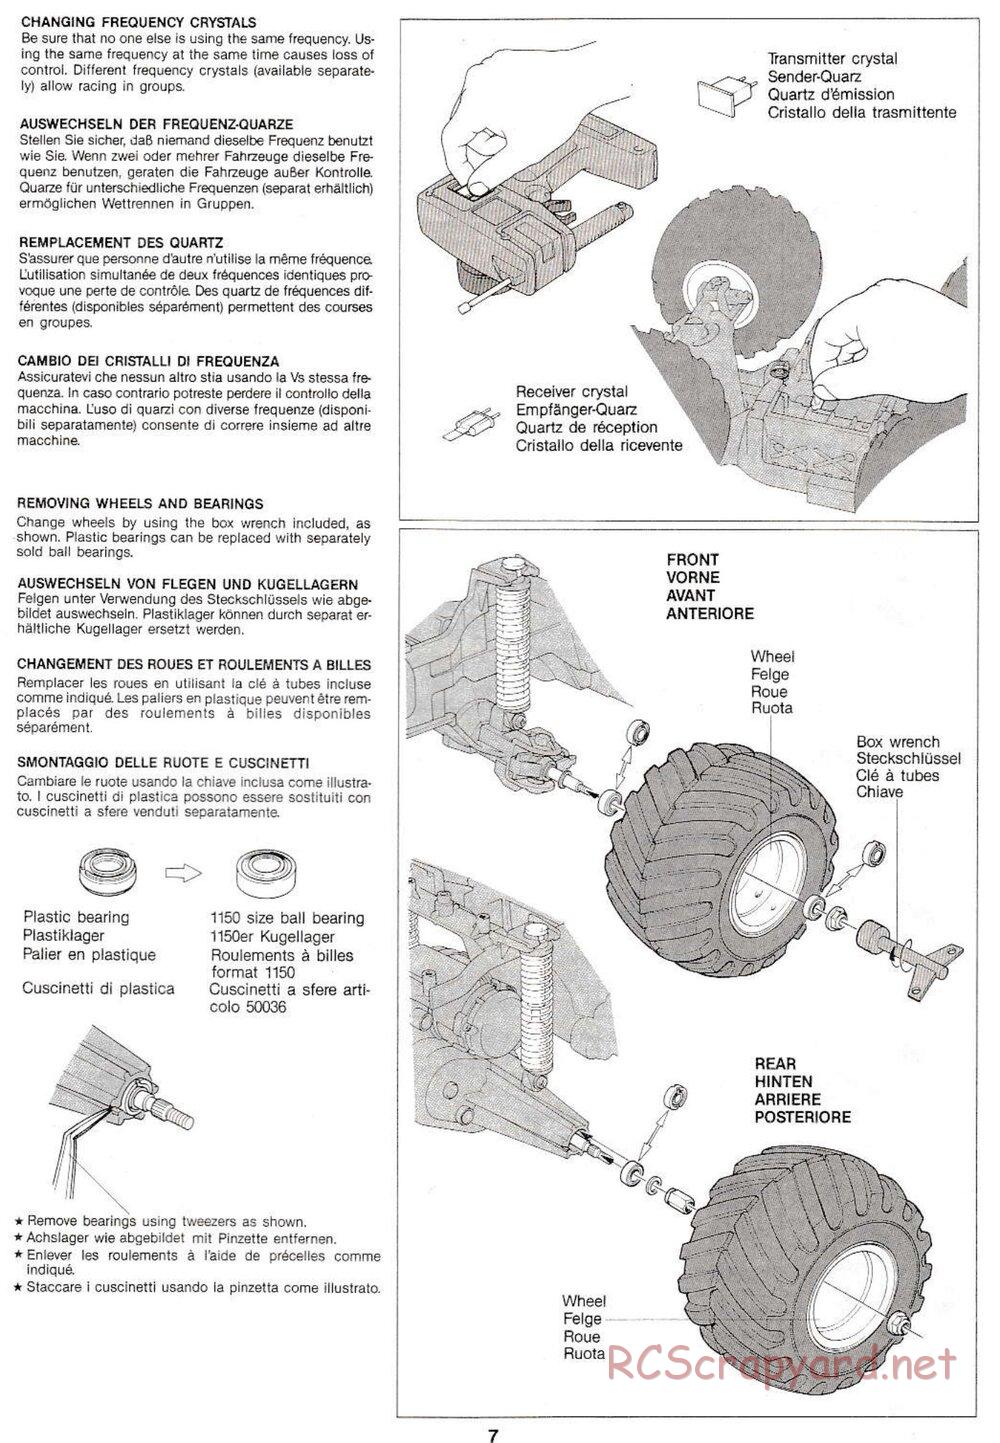 Tamiya - Clod Buster QD Chassis - Manual - Page 7